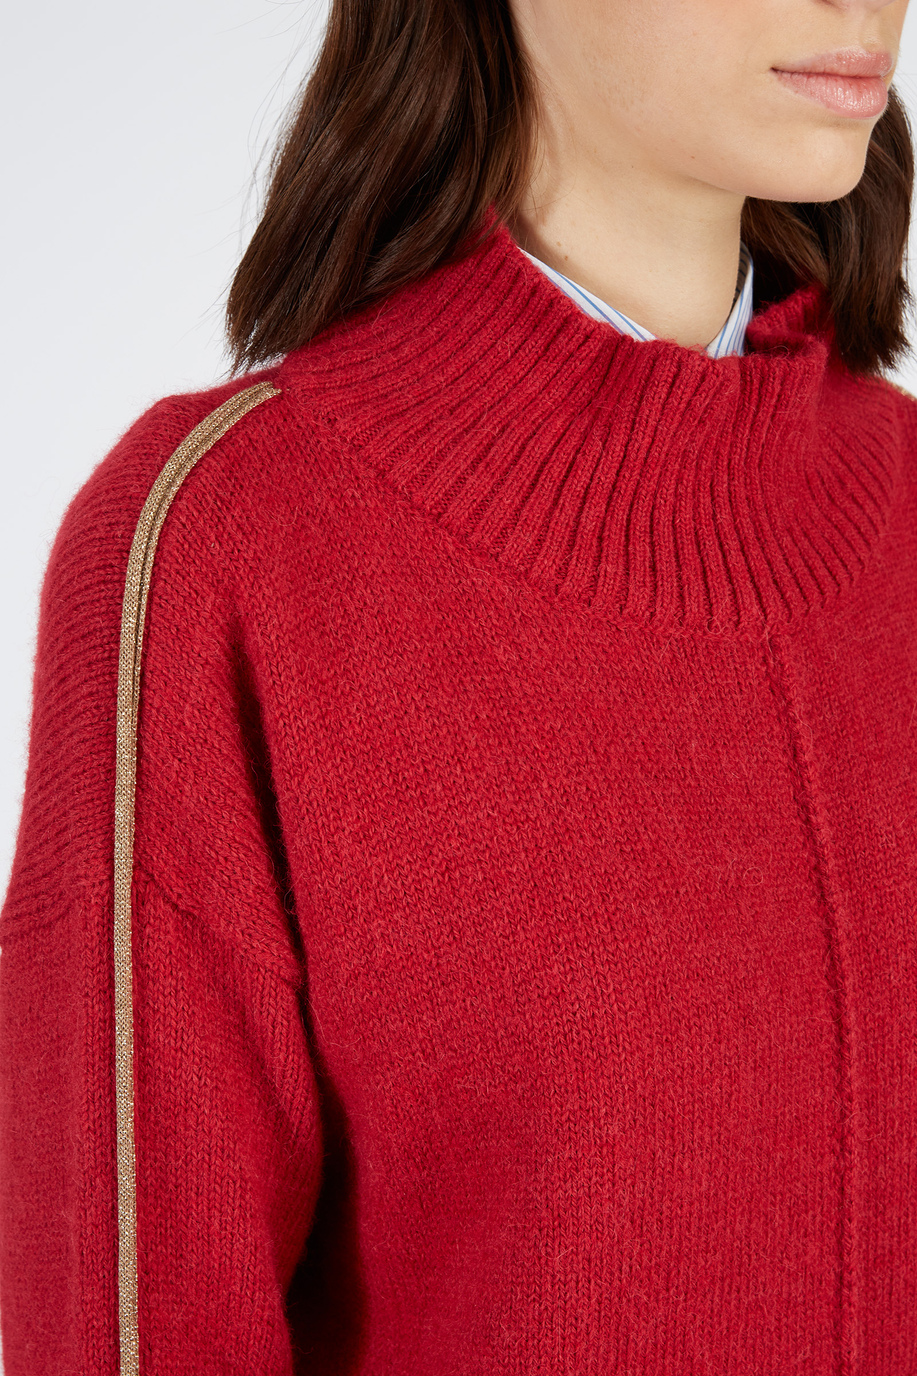 Women’s high neck sweater in alpaca regular fit - Elegant looks for her | La Martina - Official Online Shop